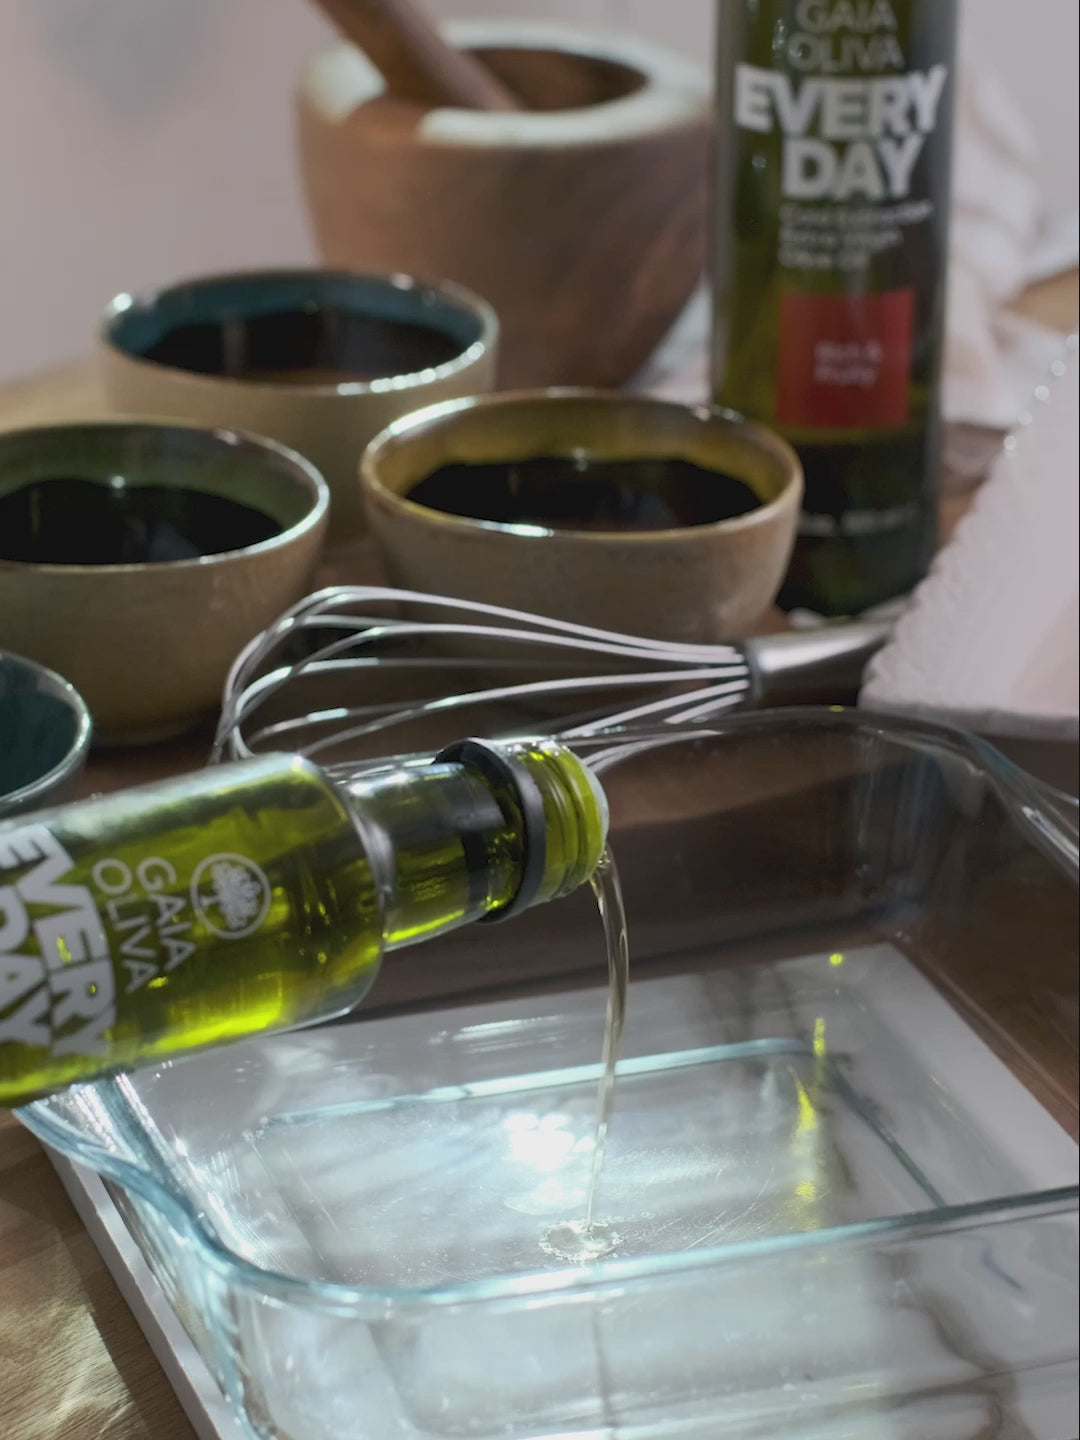 Everyday Extra Virgin Olive Oil 500 ml